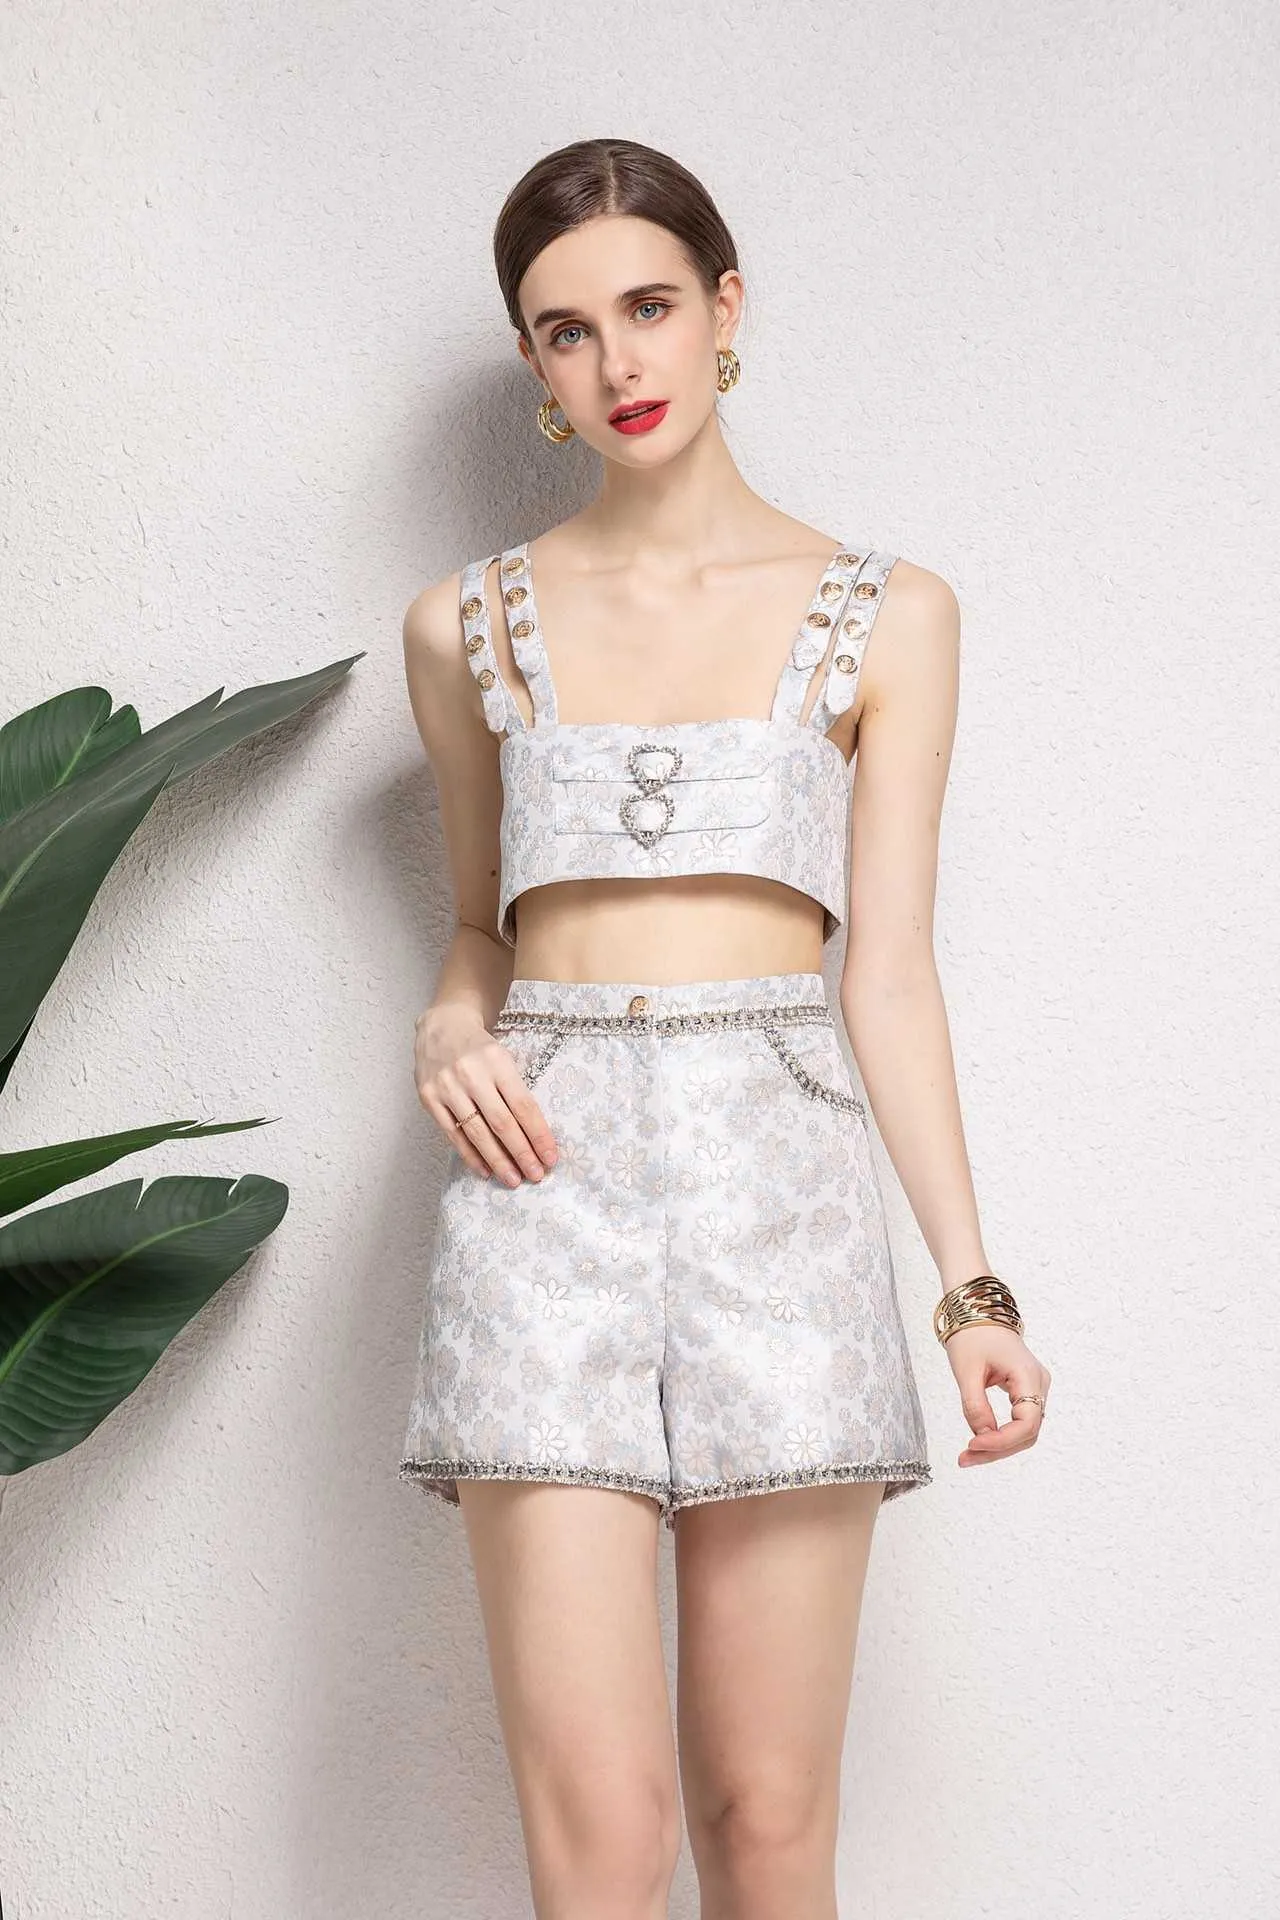 Vintage Jacquard Slip Top And Diamond Lace Shorts Set For Women Truevoker  Summer Runway Fashion 210602 From Bai01, $54.88